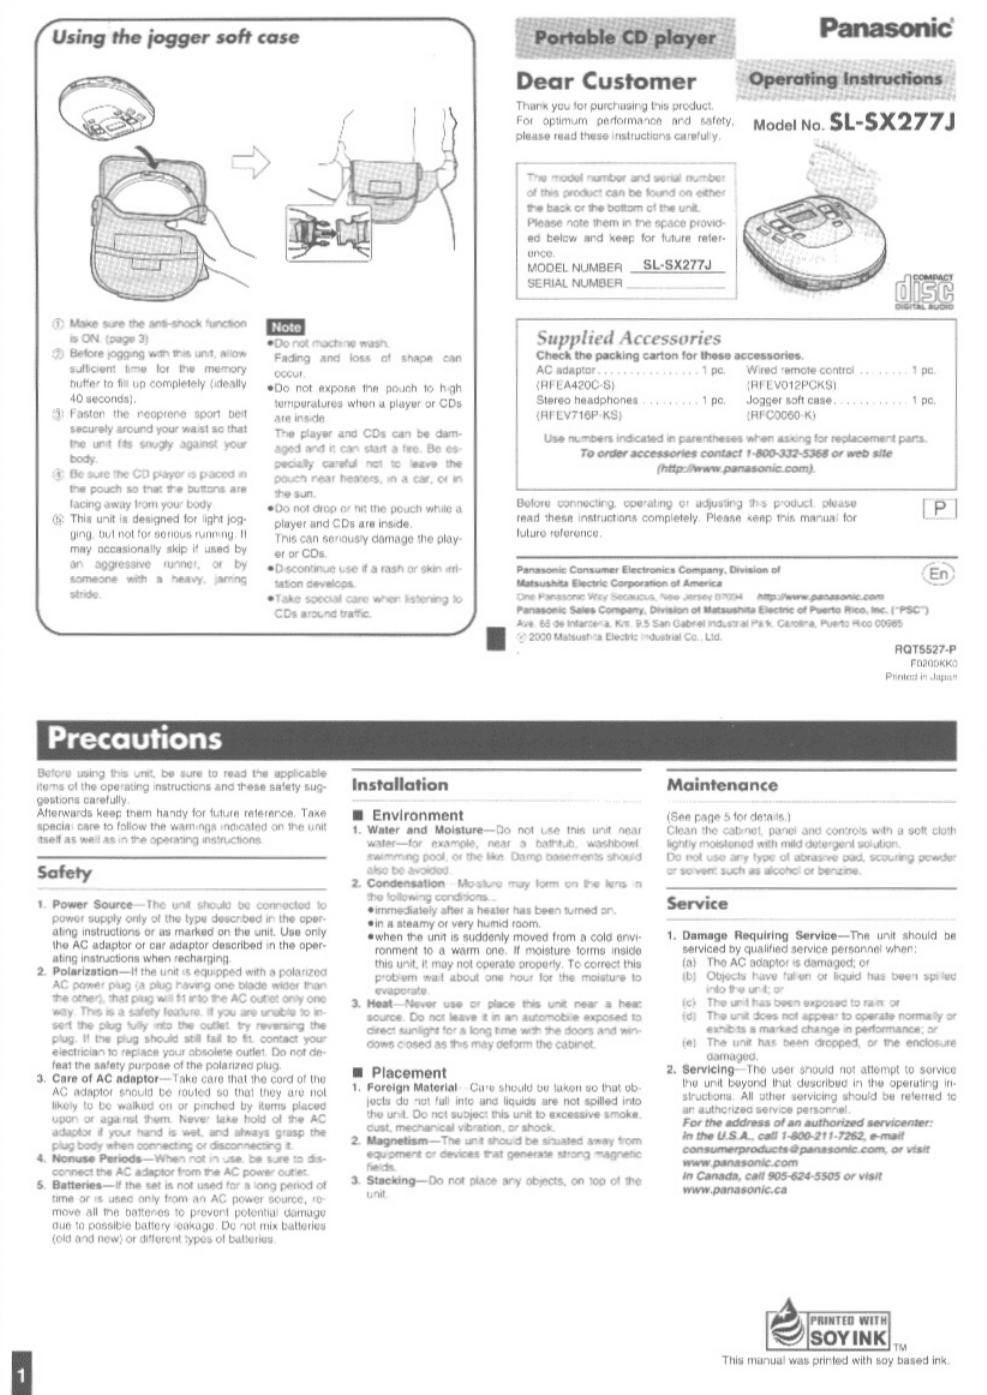 panasonic sl sx 277 j owners manual